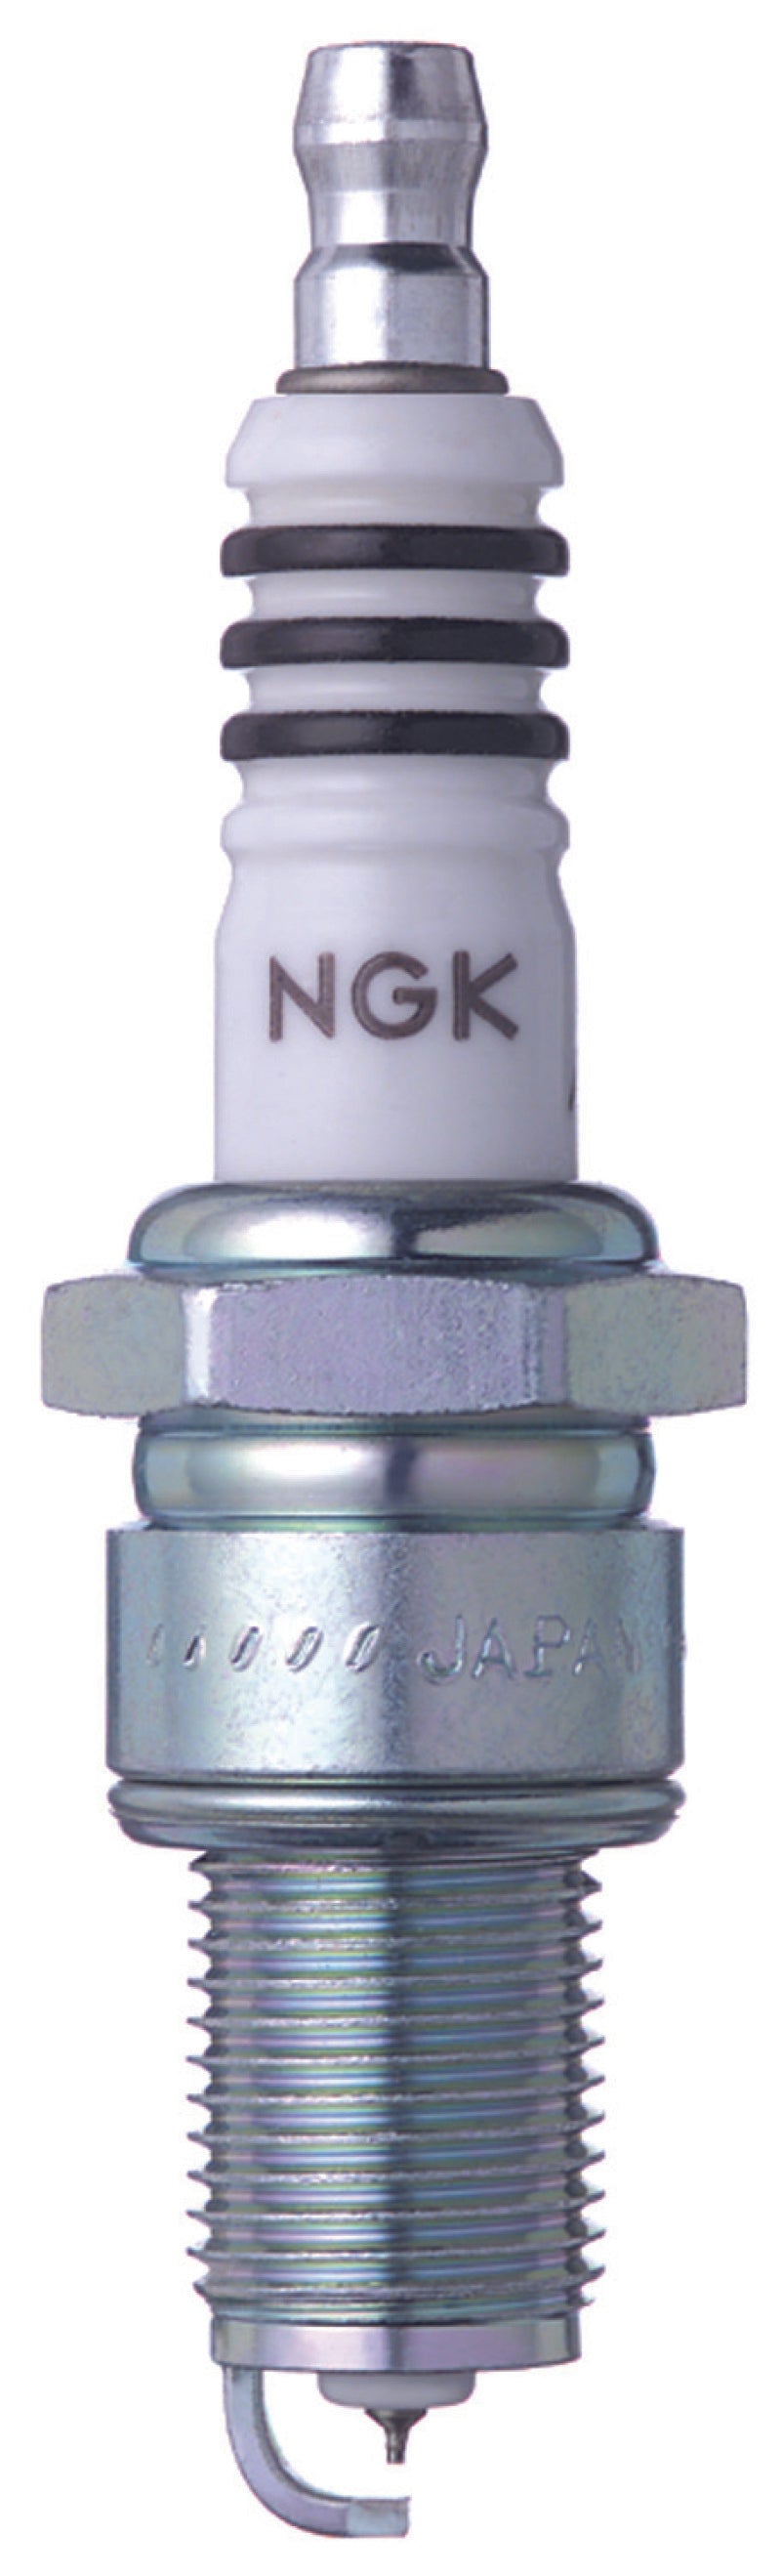 NGK Iridium Stock Heat Spark Plugs Box of 4 (BPR7EIX).